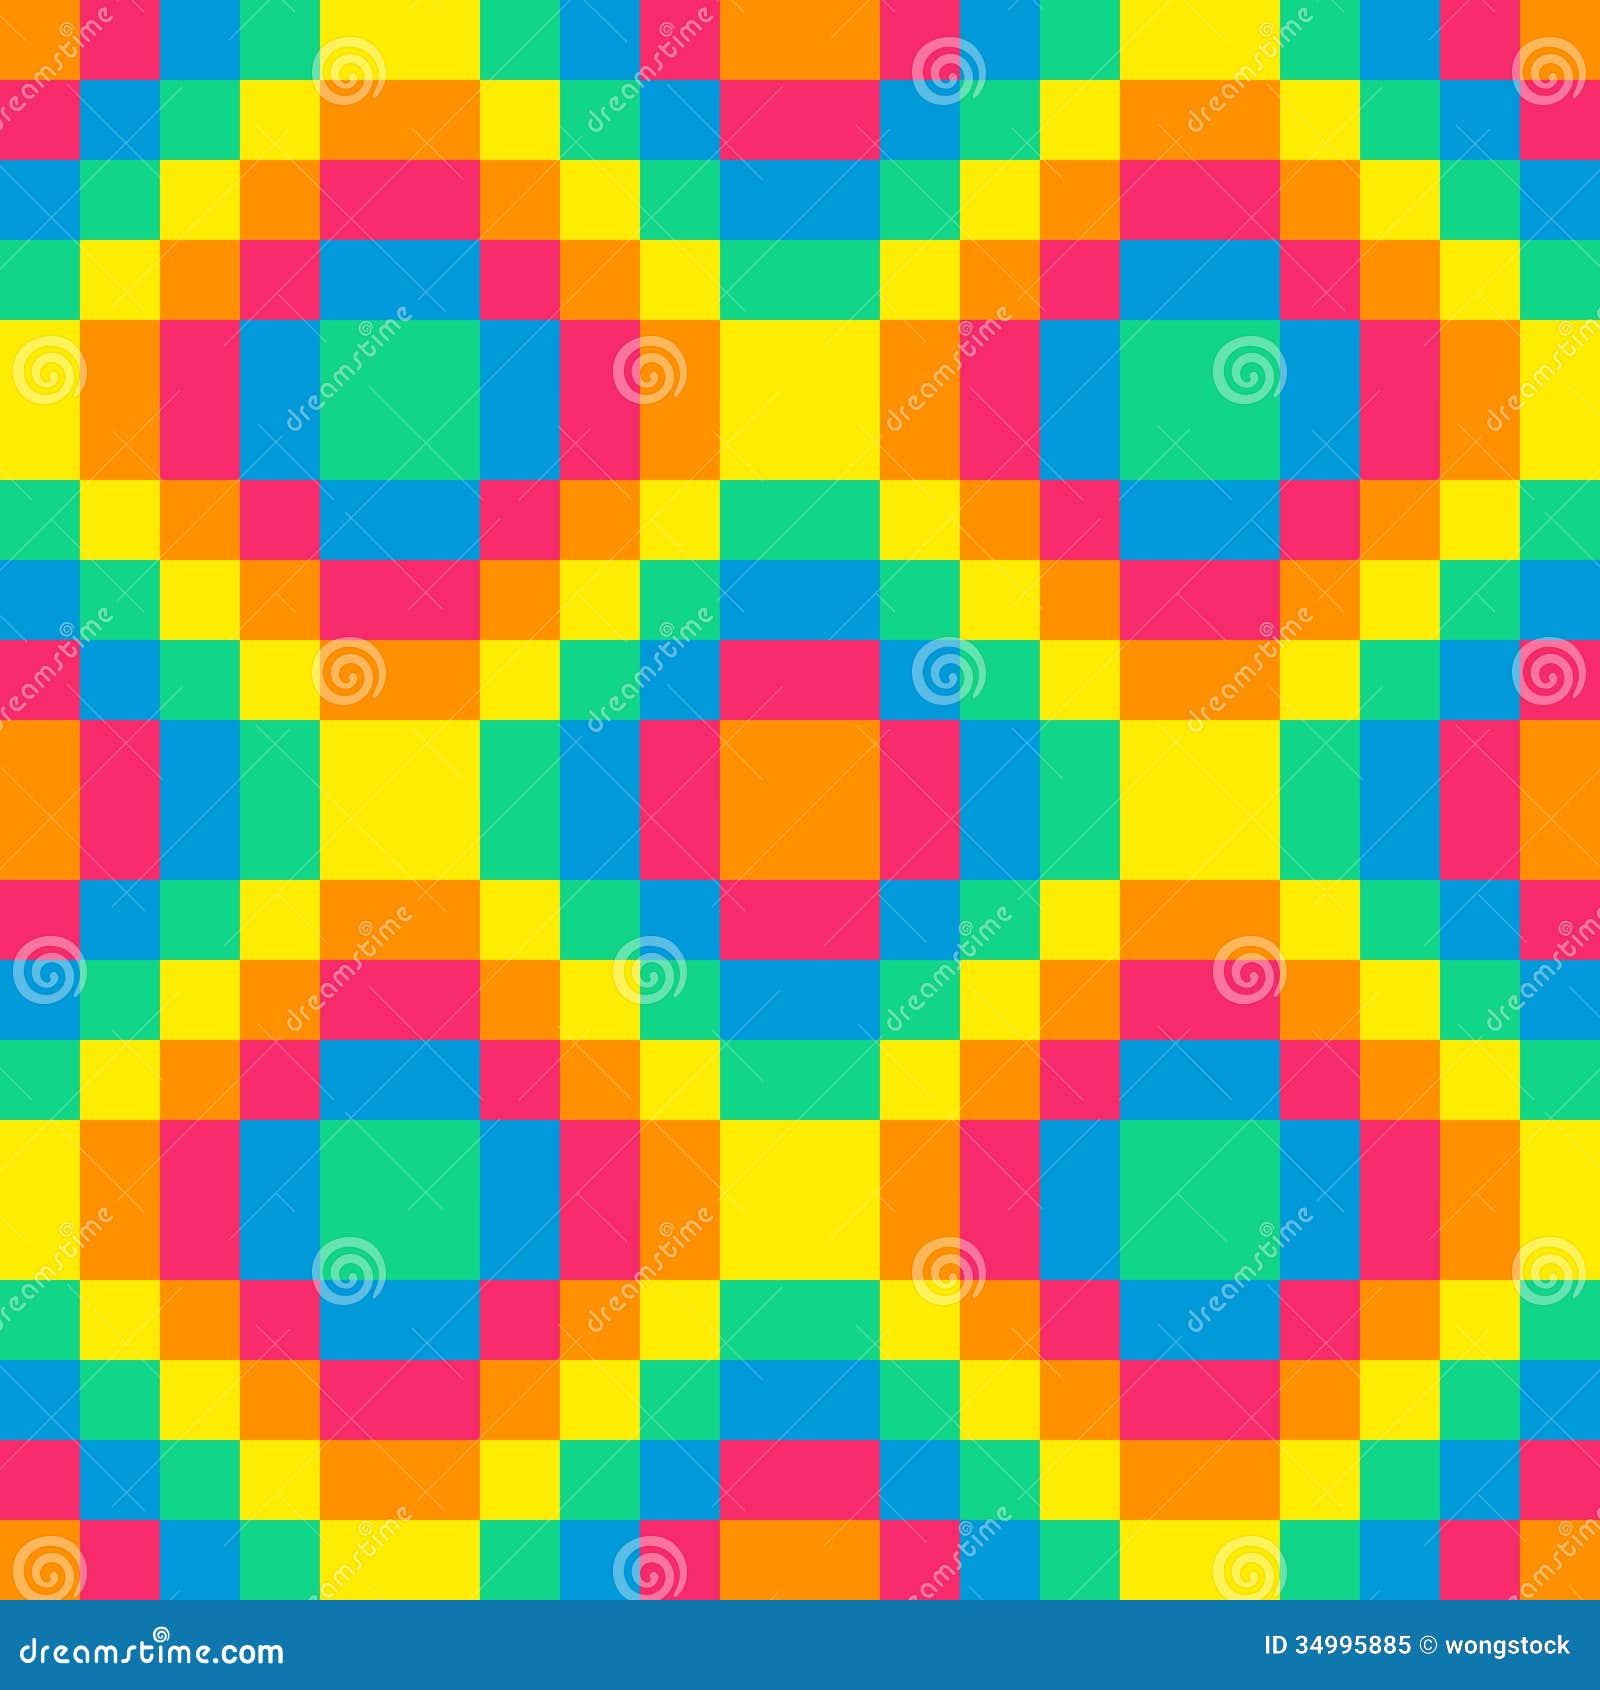 8 Bit Seamless Rainbow Diamond Pattern Background Tile Stock Vector Illustration Of Bright Mosaic